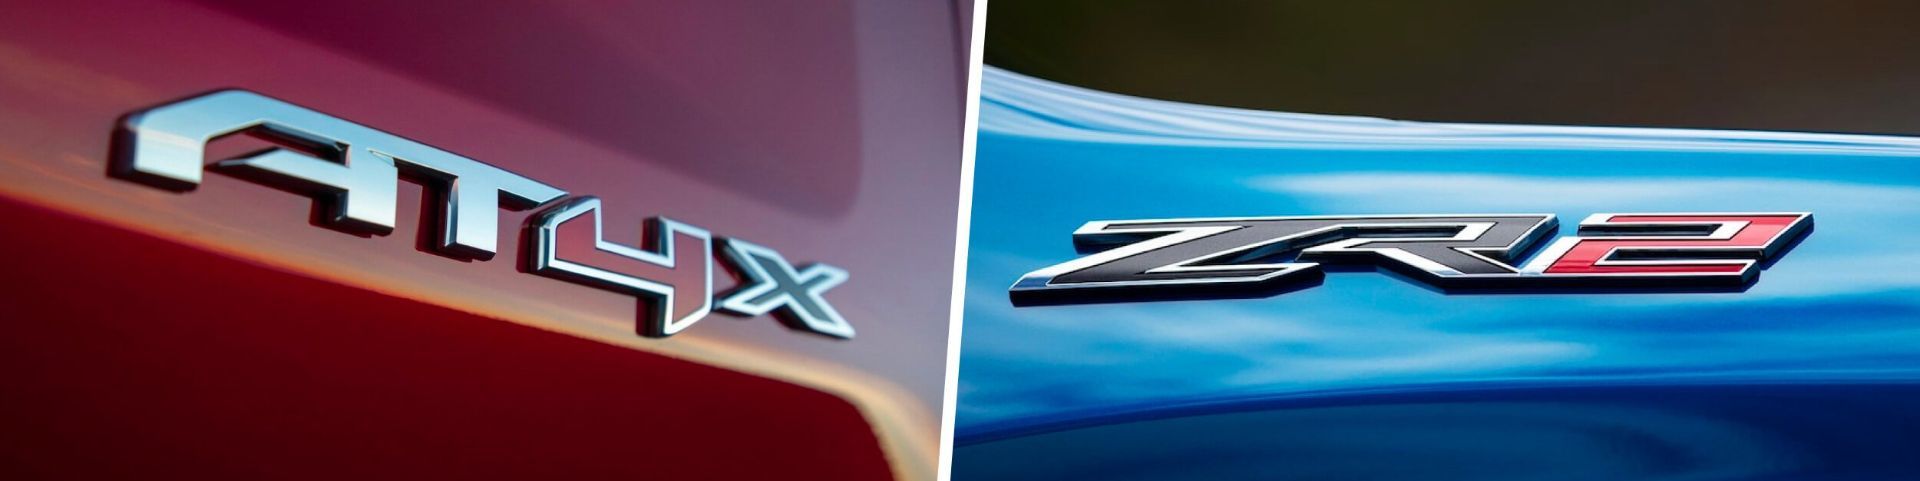 Make A Powerful Choice With The 2022 Sierra ATX4 And Silverado ZR2